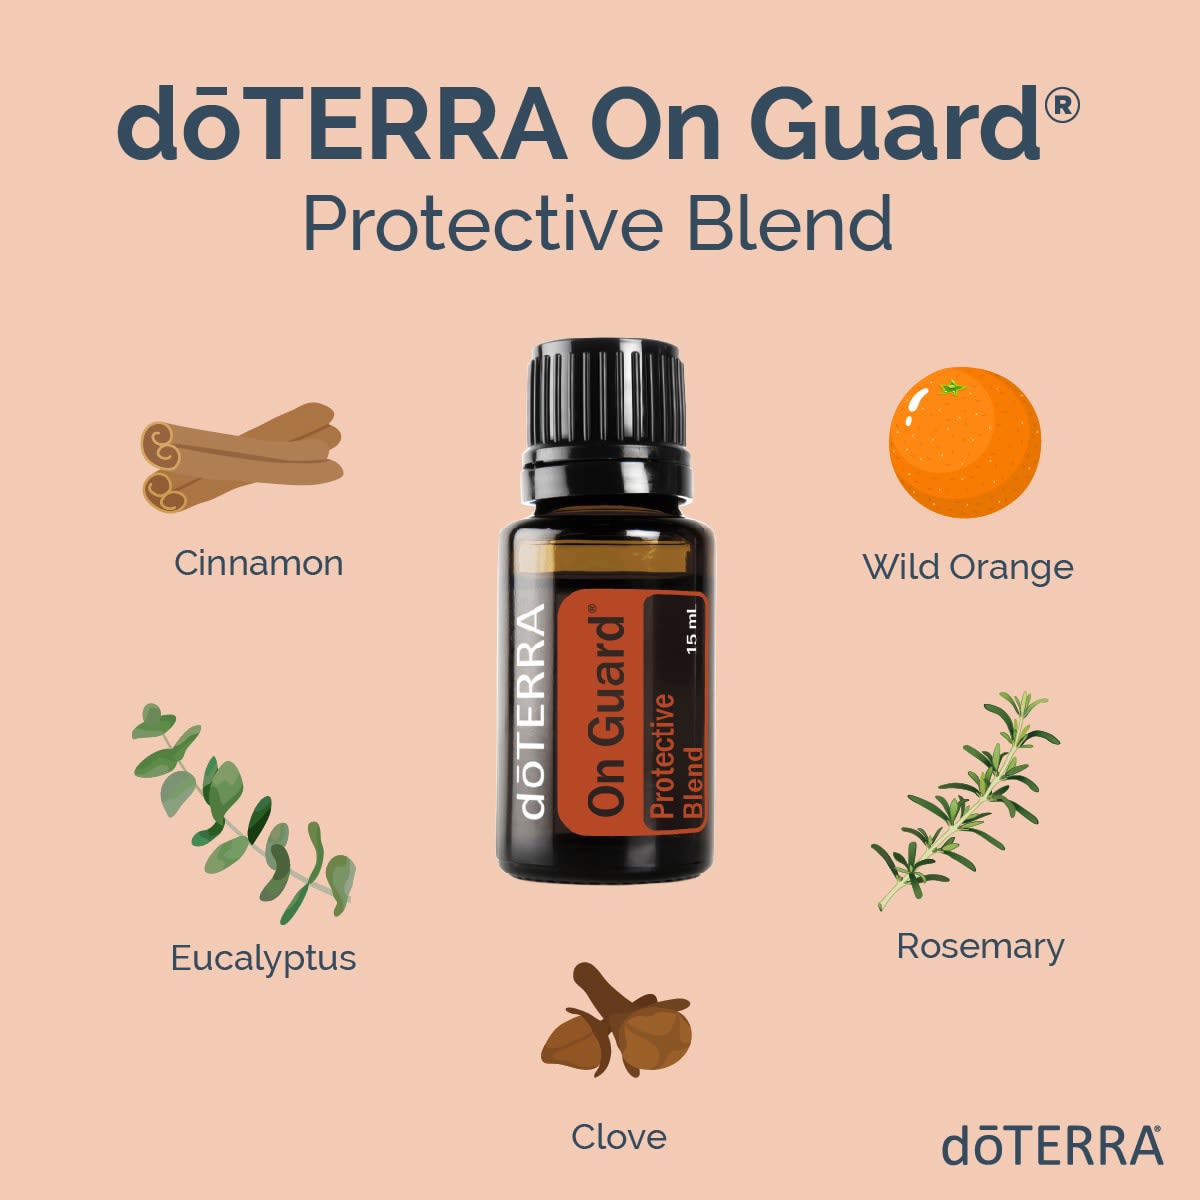 dōTERRA On Guard® Oil - dōTERRA On Guard® Products - Integrative